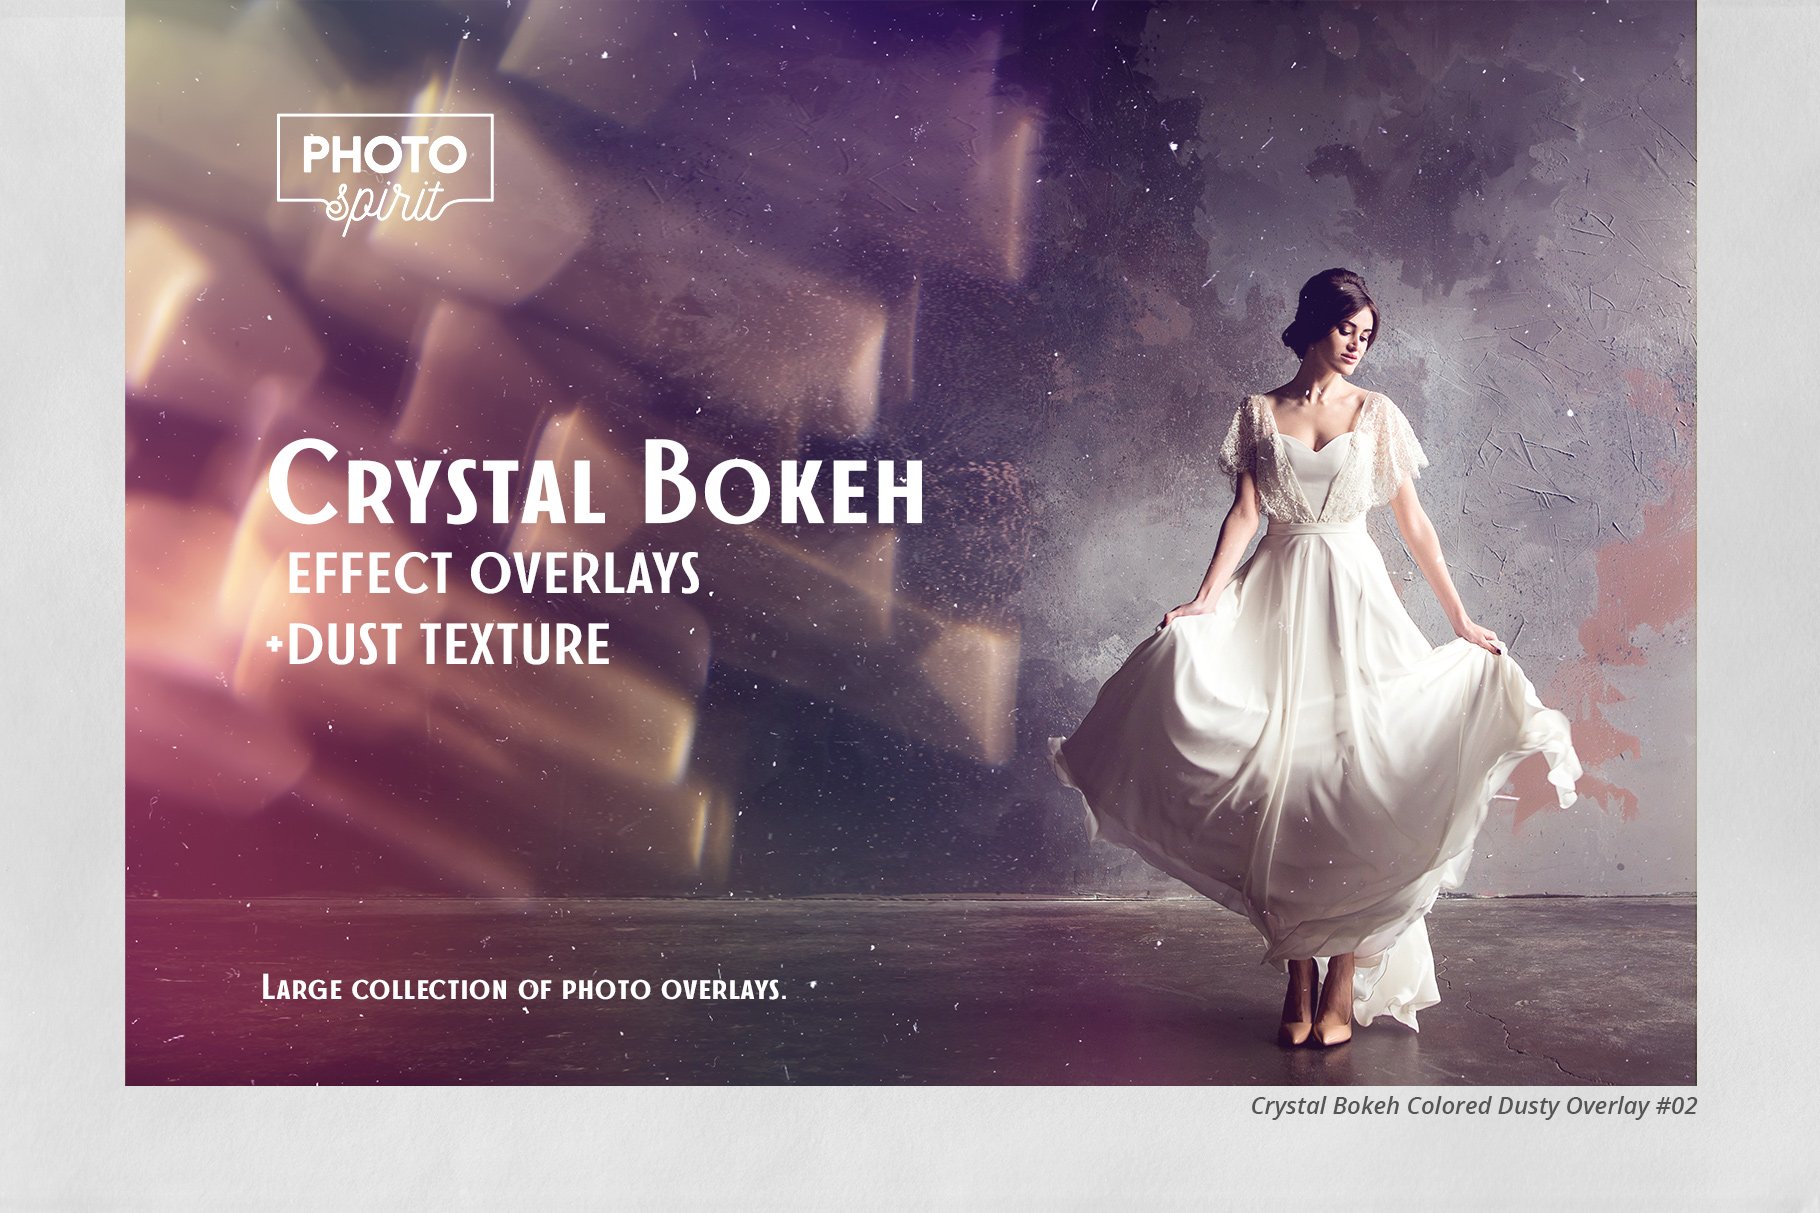 Crystal Bokeh Effect Overlayscover image.